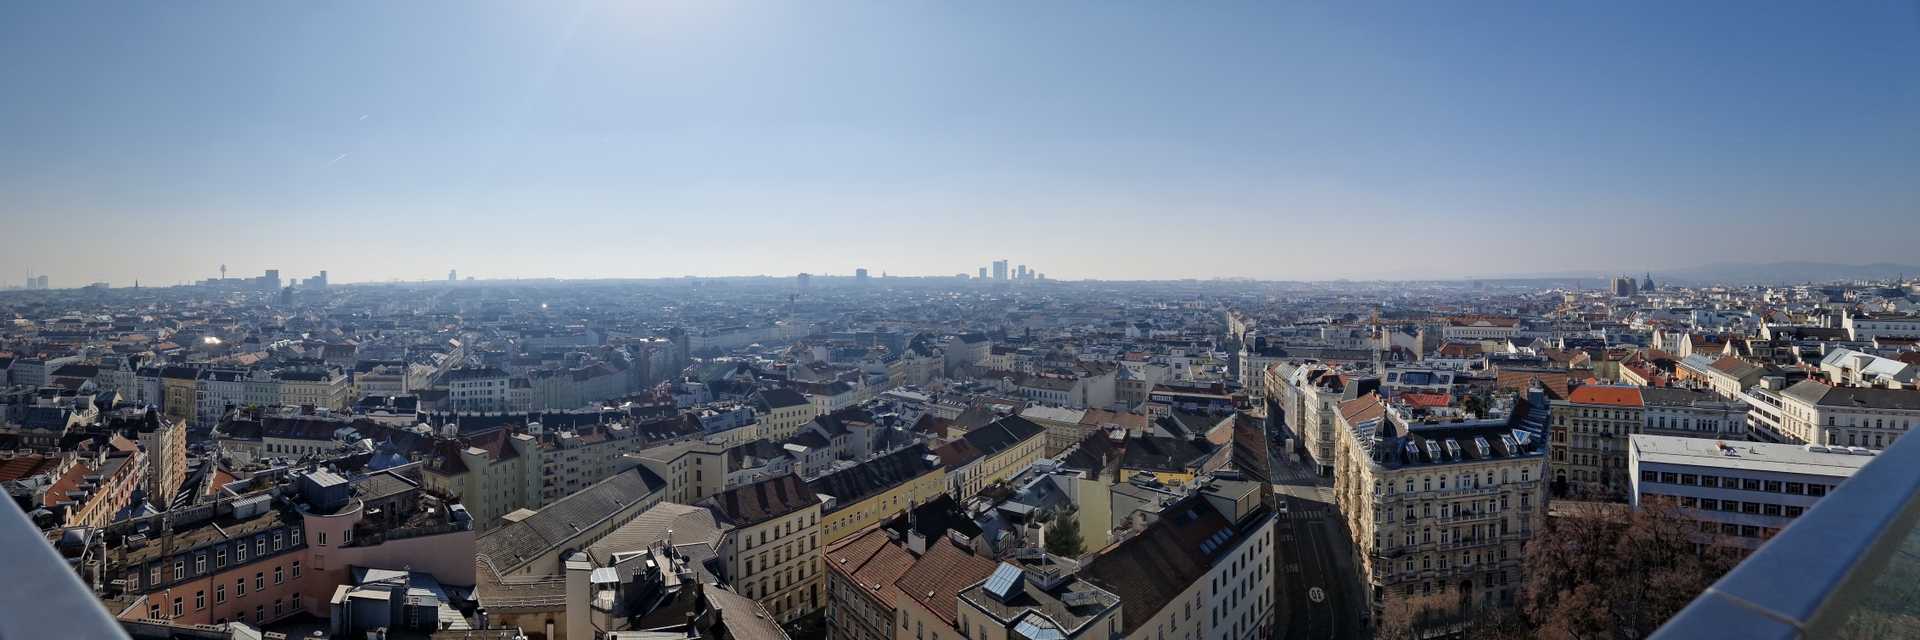 PageTitle1 - Cabinet fiscal à Vienne